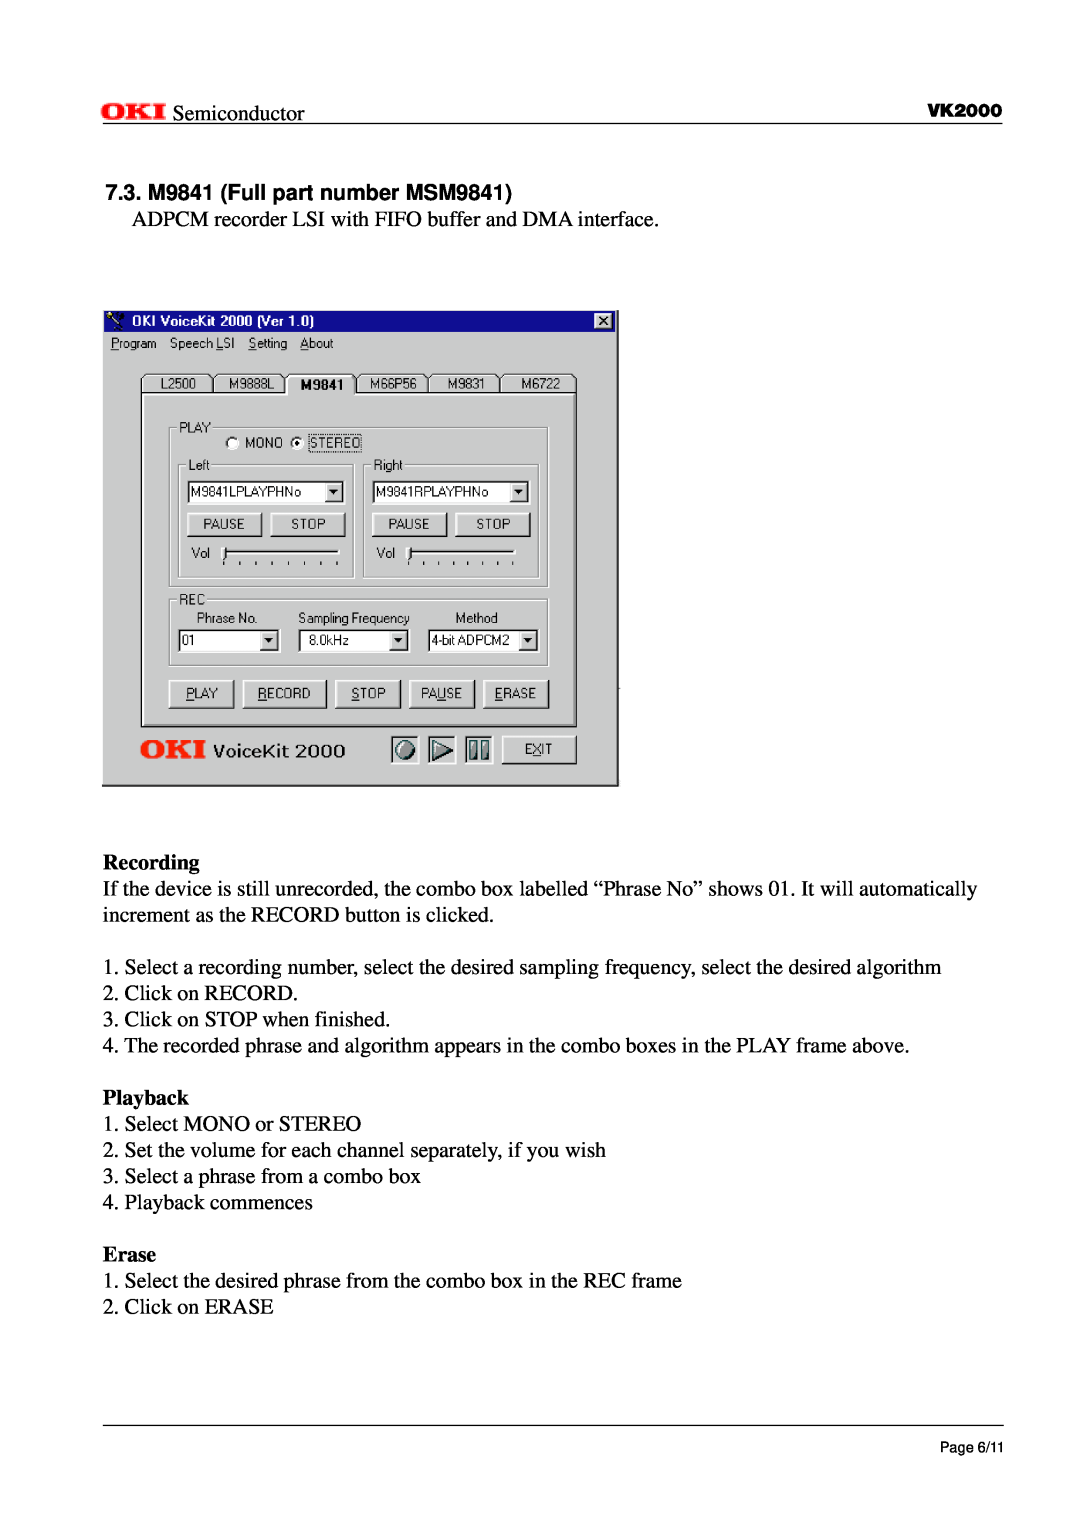 Oki VK2000 instruction manual 7.3. M9841 Full part number MSM9841, Semiconductor, Recording, Playback, Erase 